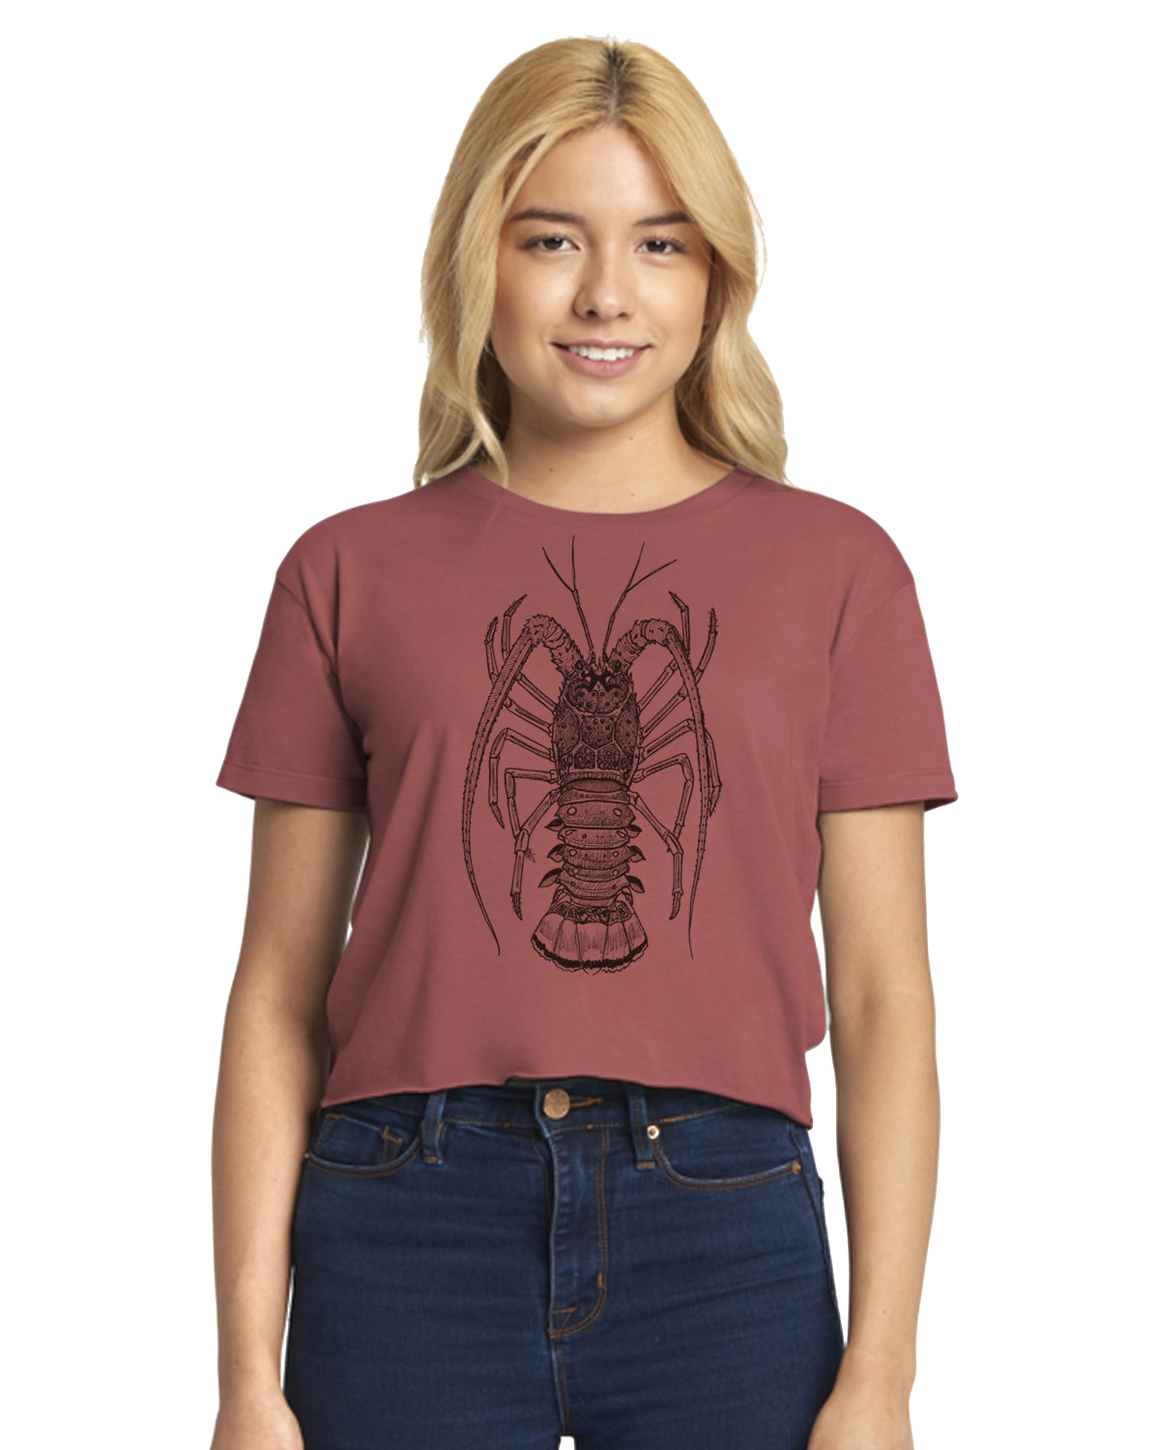 Lobster Festival Crop by Jessica Shipley